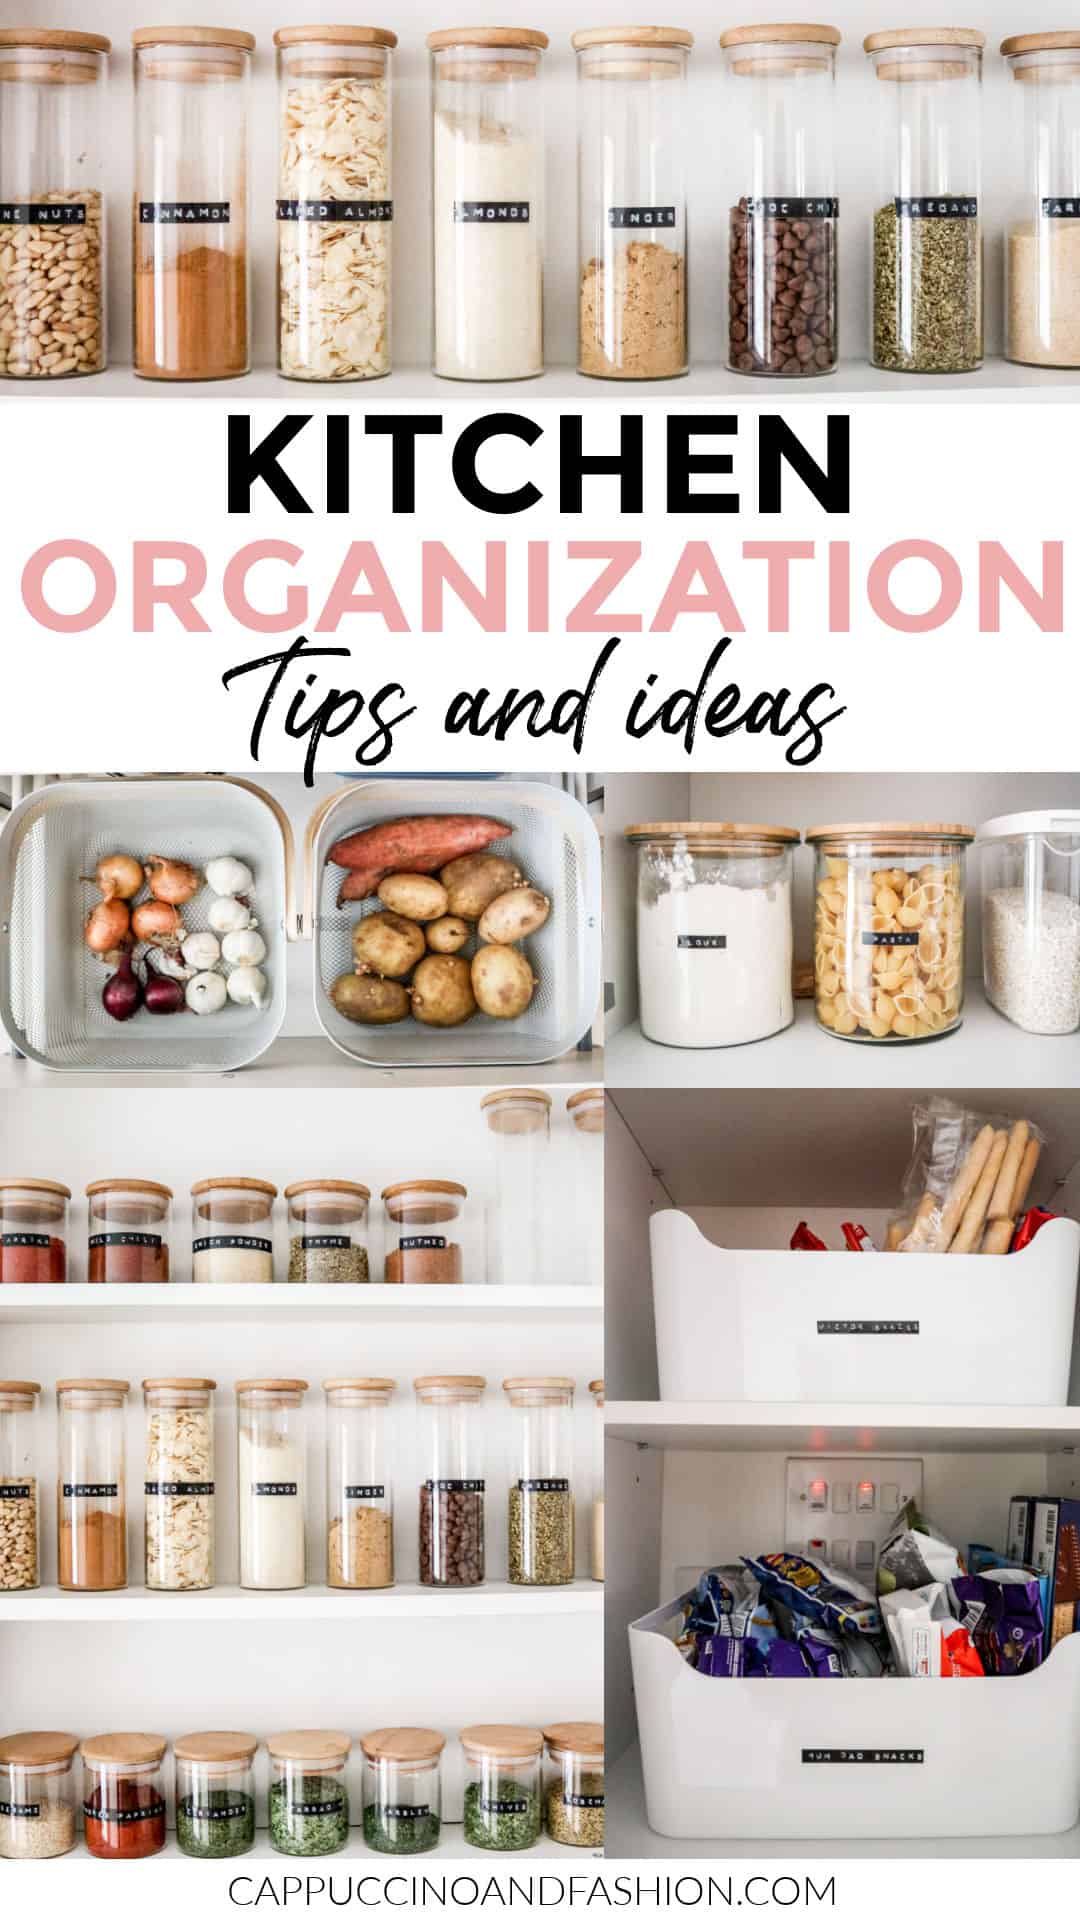 Kitchen organization tips and ideas